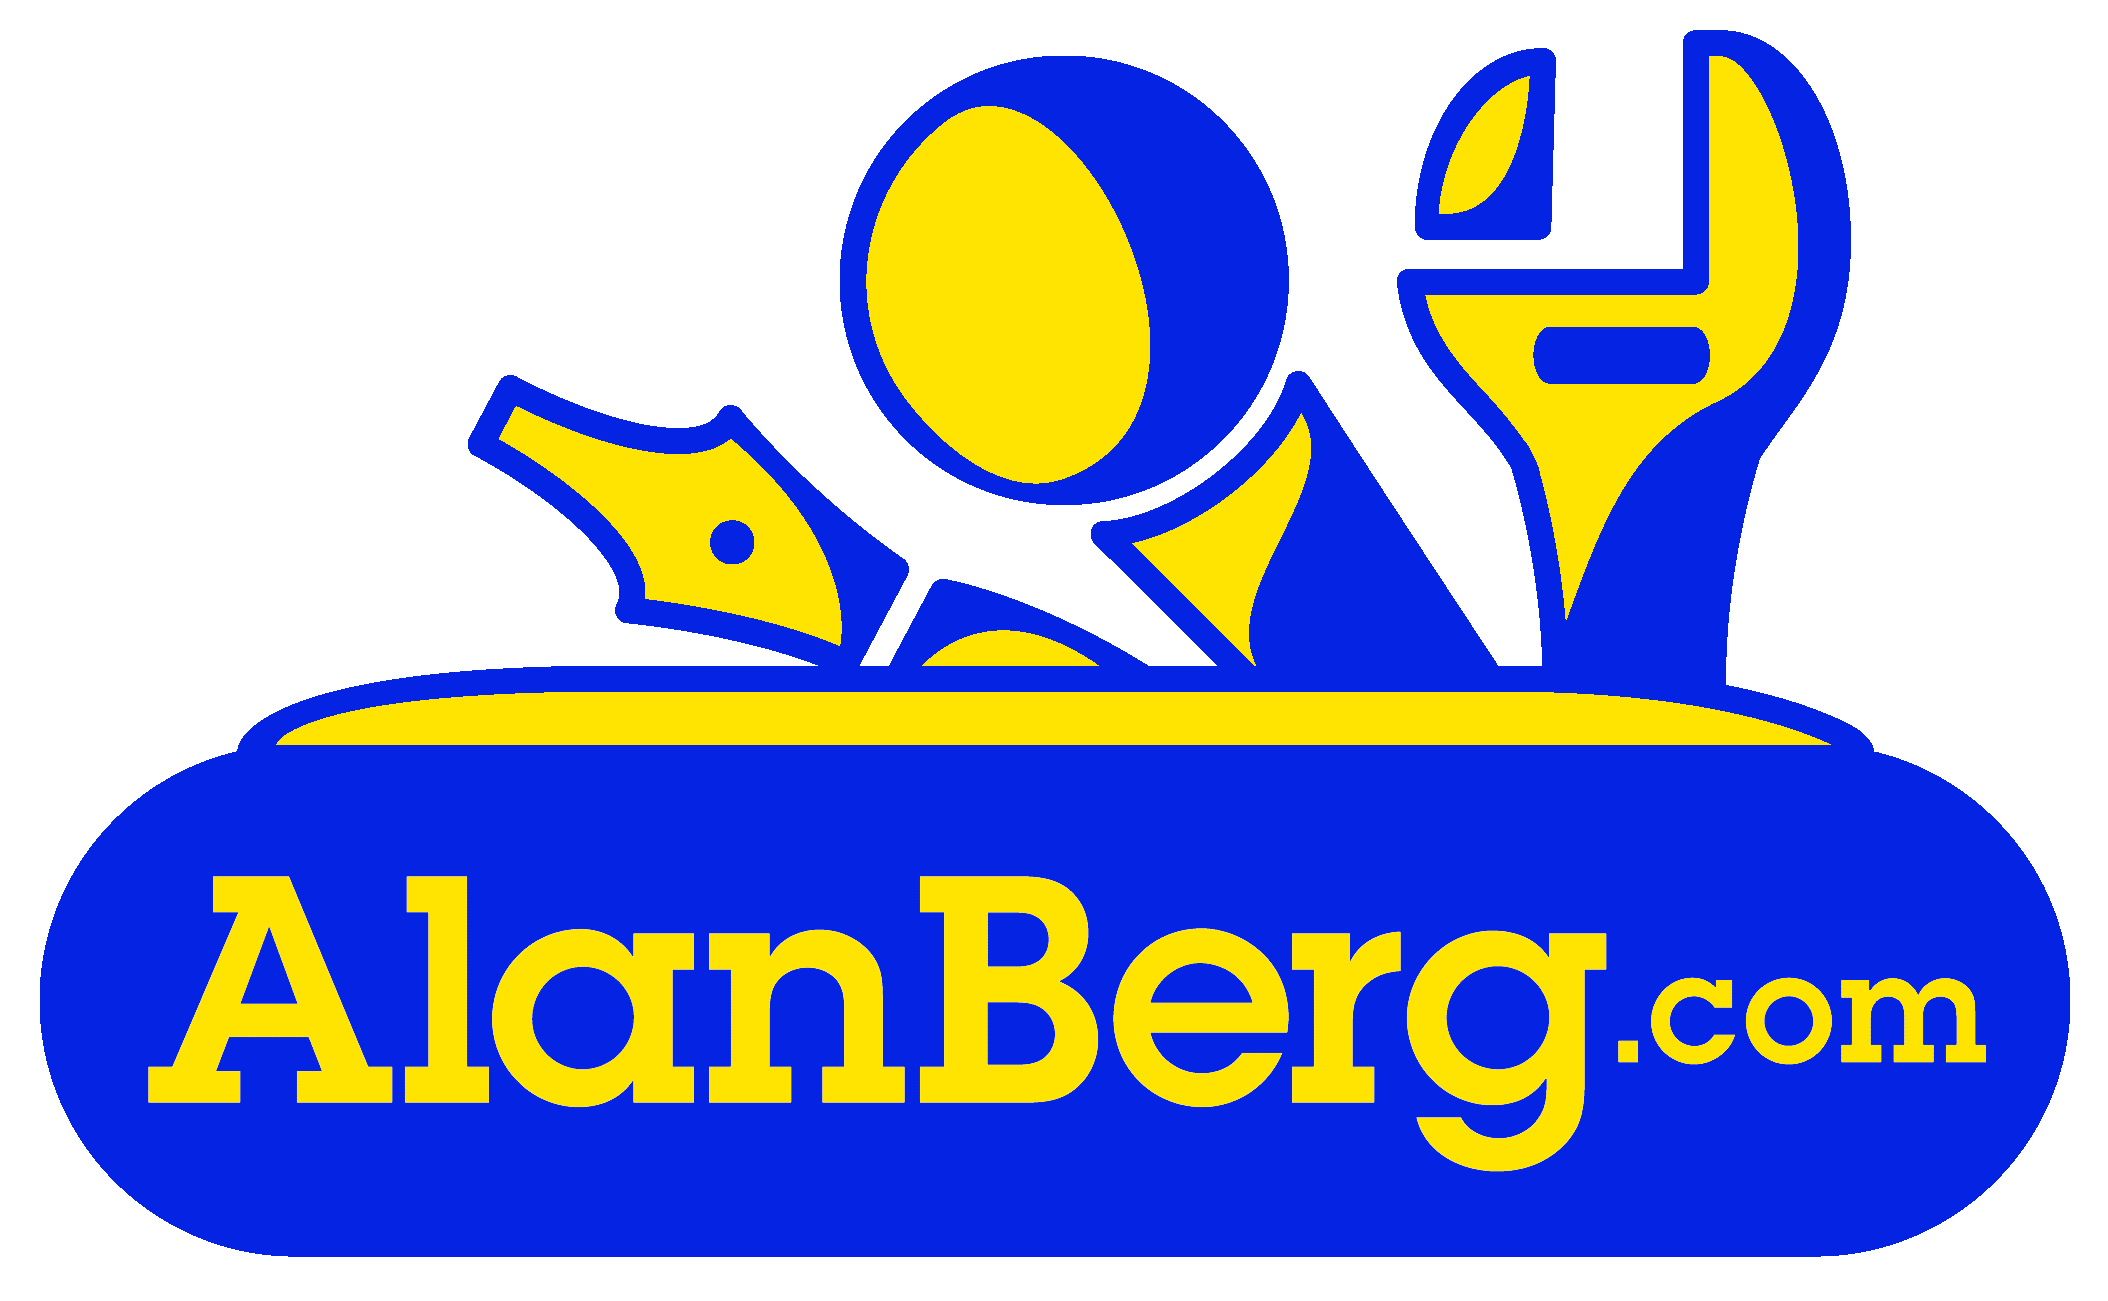 Alan Berg